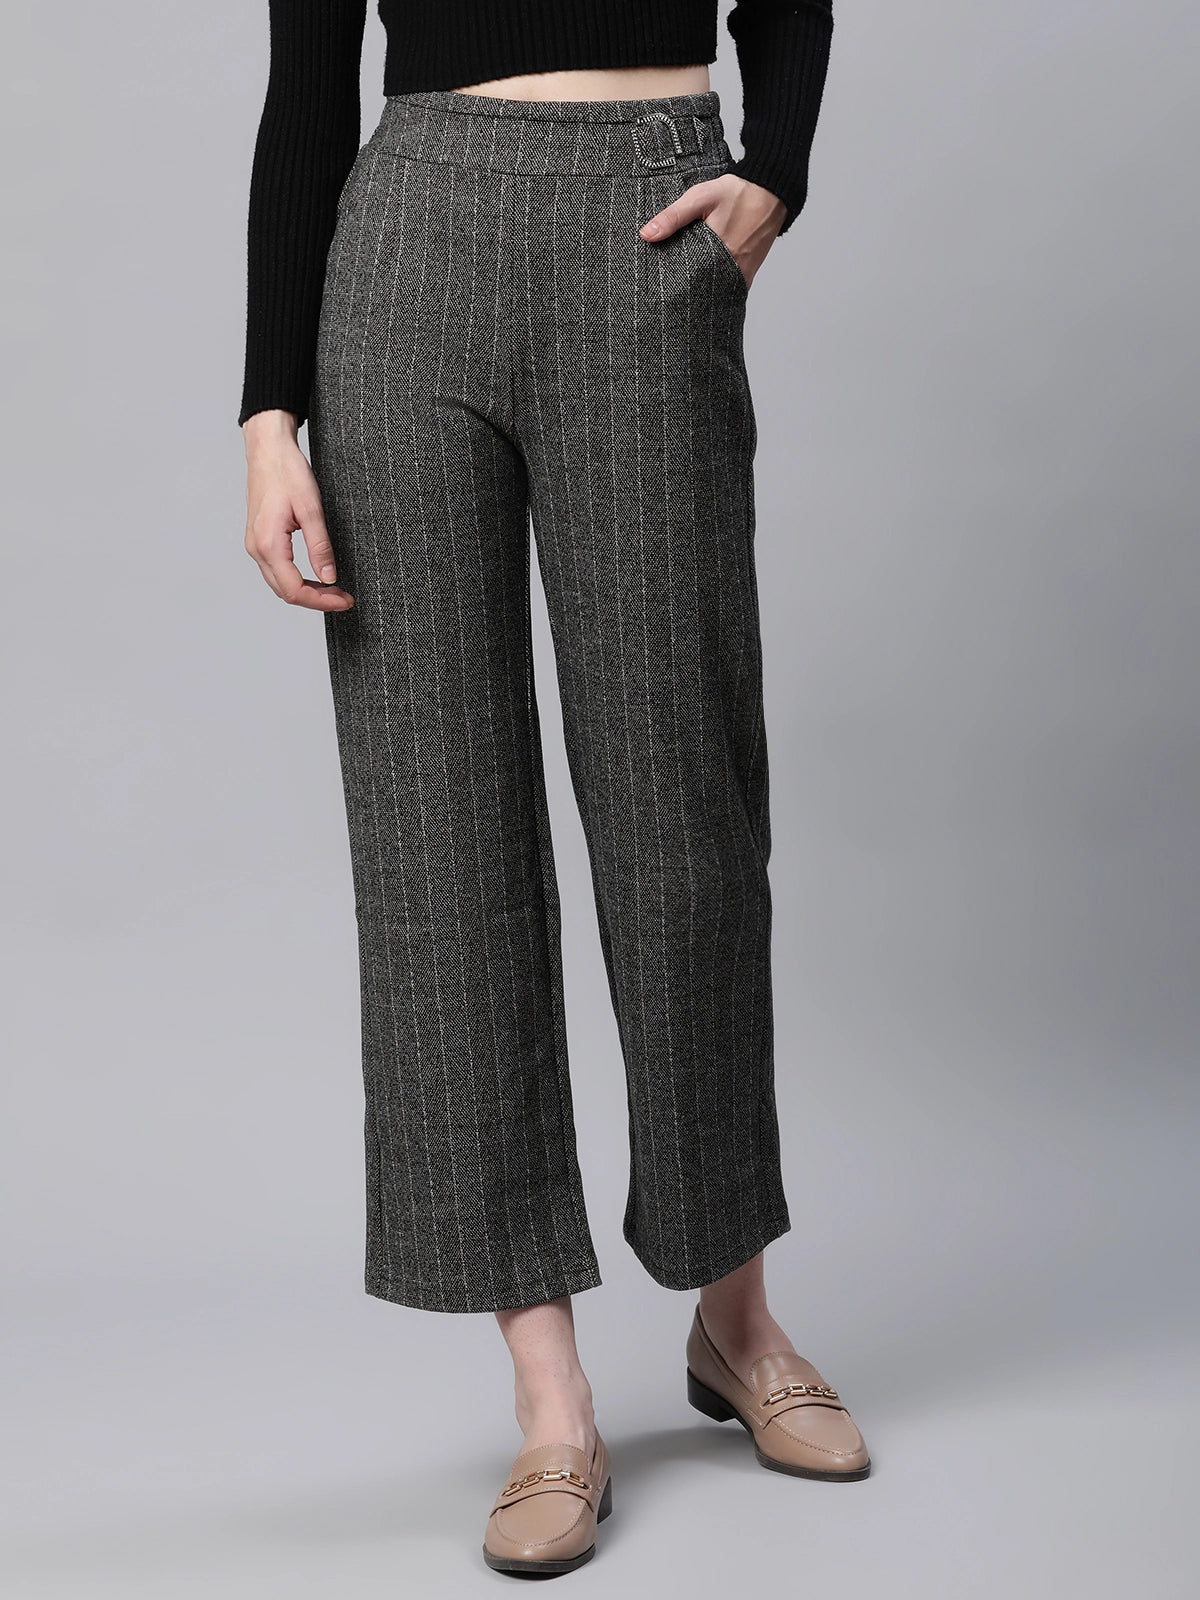 Buy Formal Trousers Pants for Women Online - Global Republic